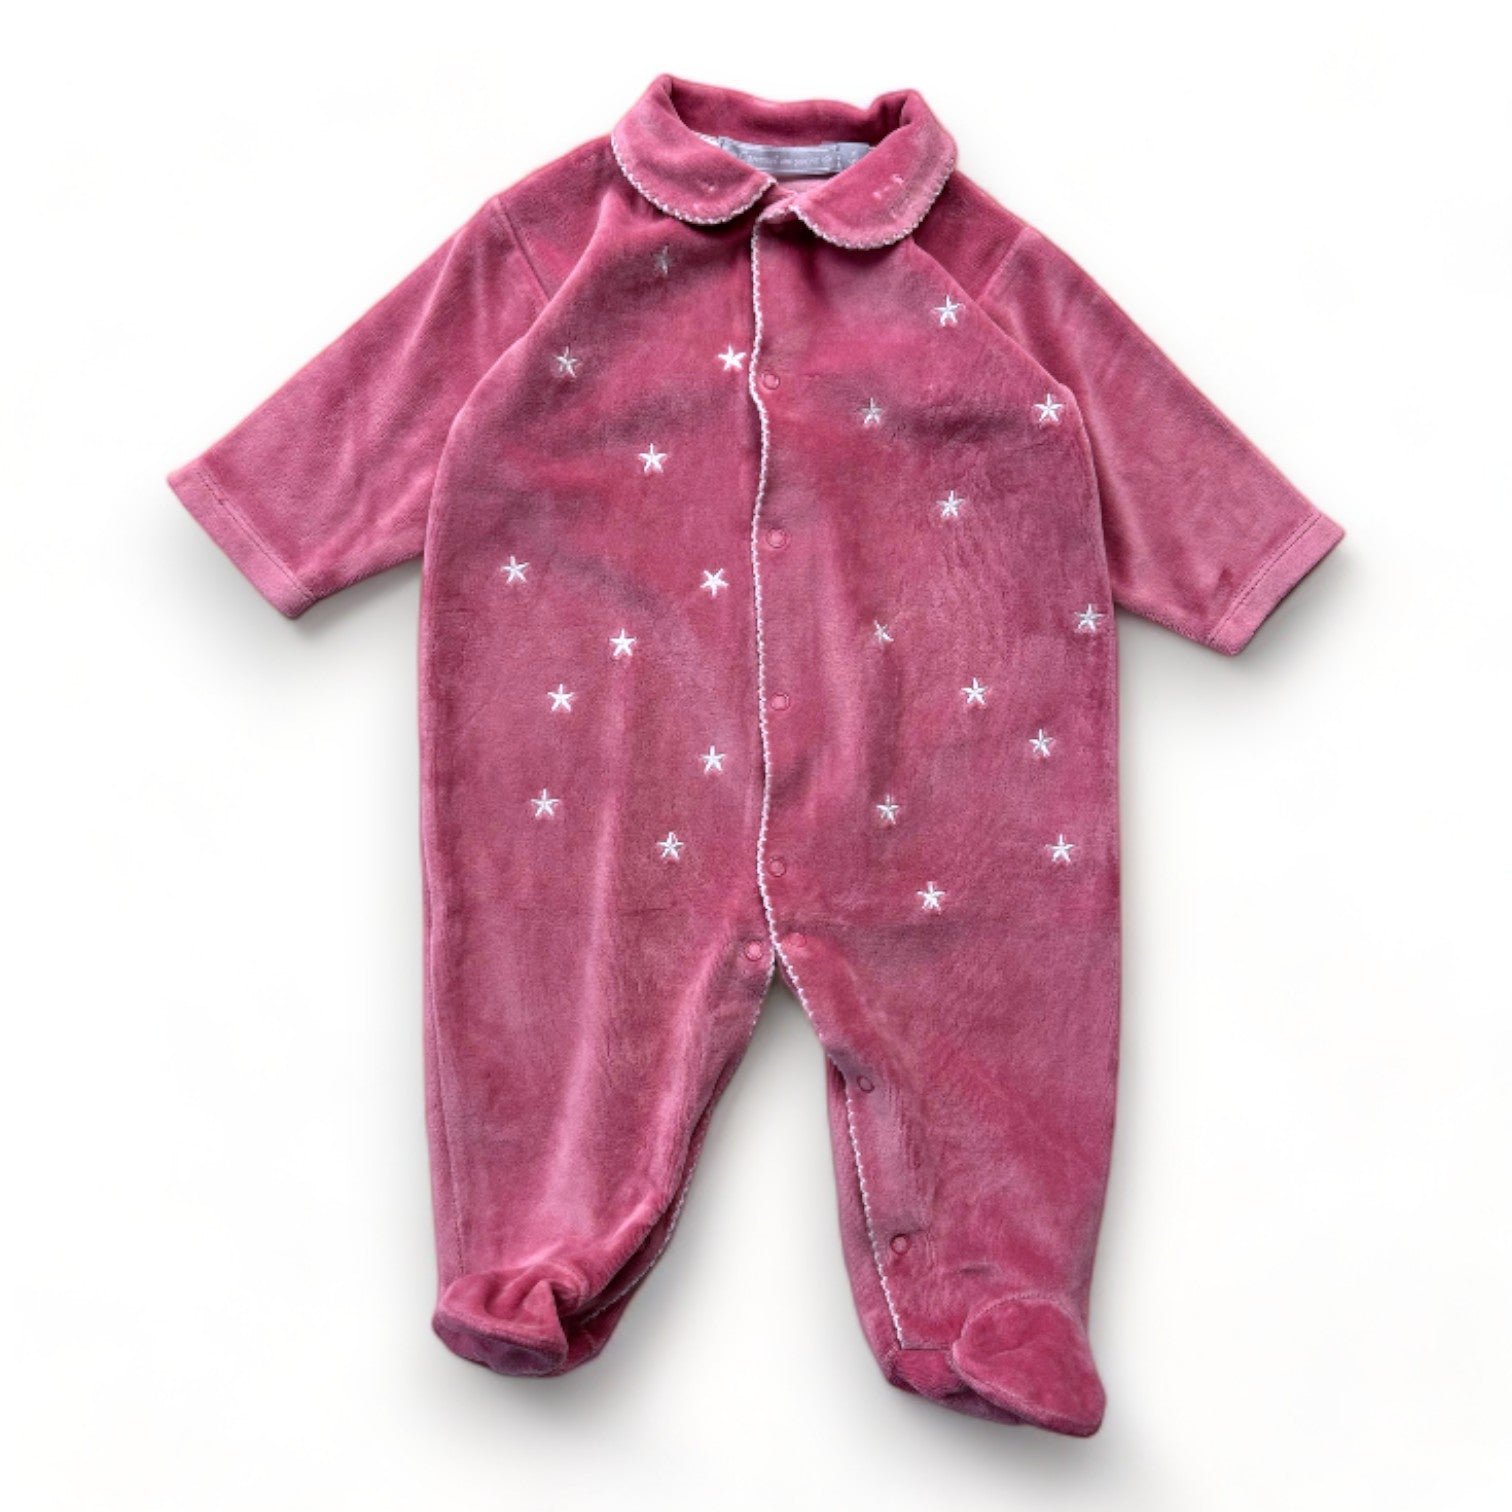 CARAMEL AU SUCRE - Pyjama rose avec étoiles - 6 mois